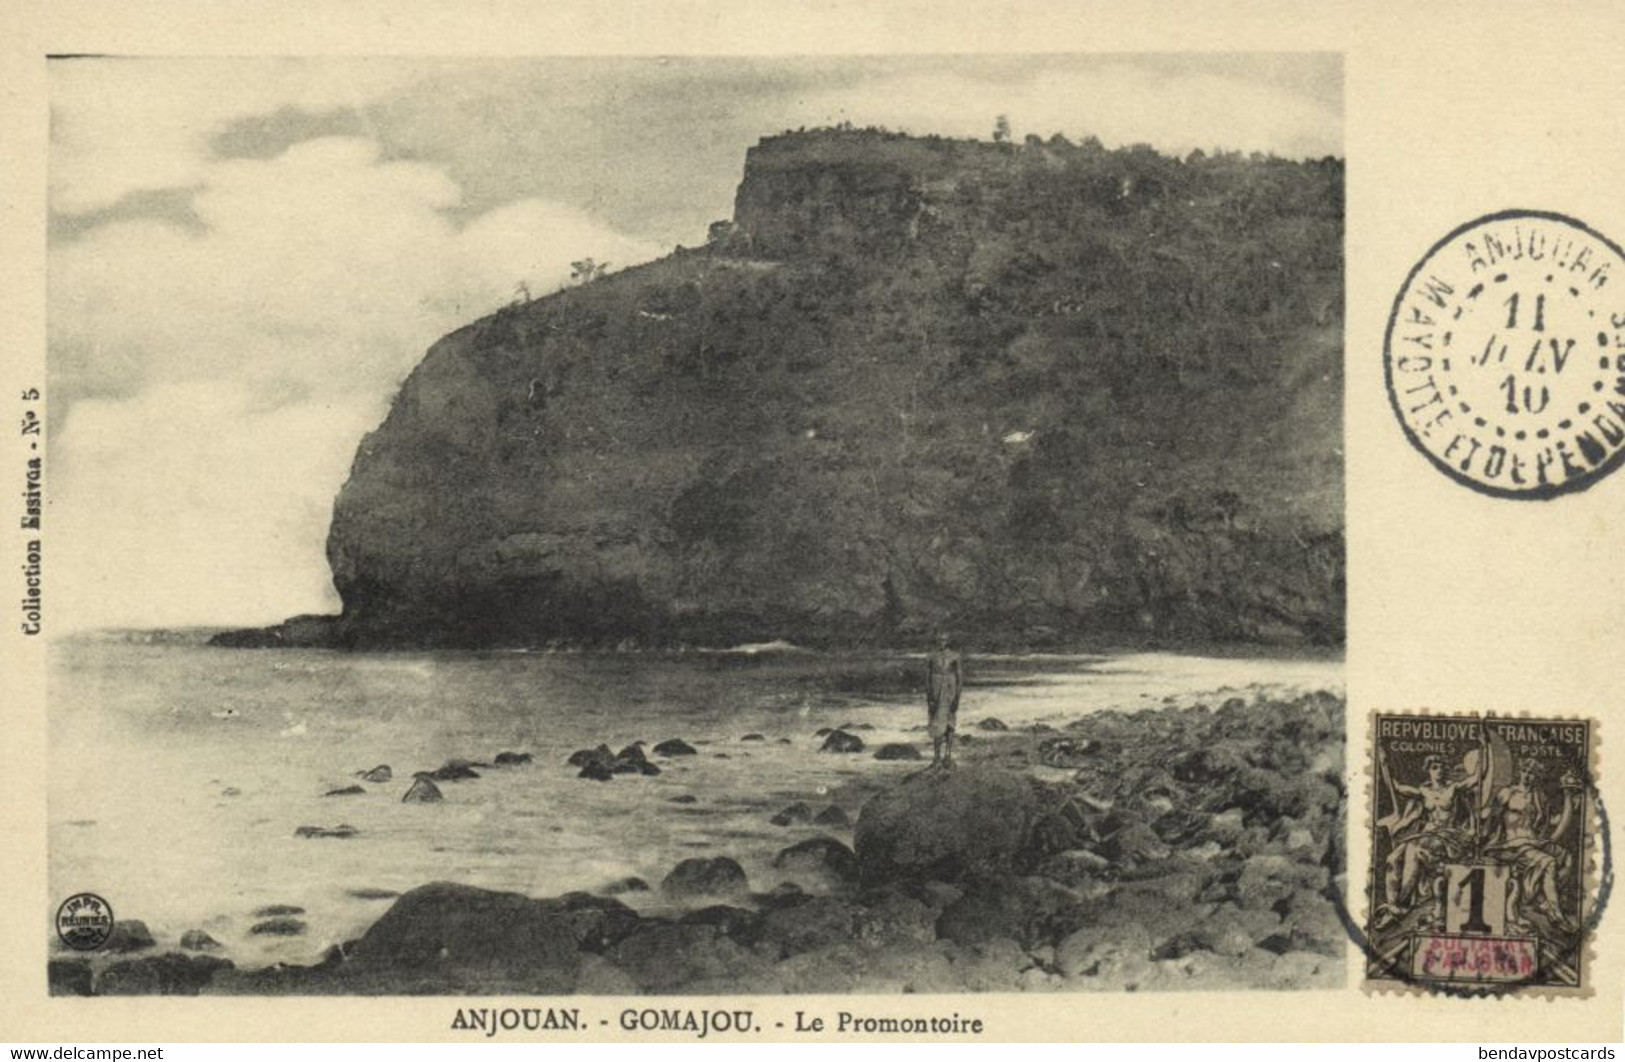 Comoros, ANJOUAN, Le Promontoire, Gomajou (1910) Postcard - Comorre